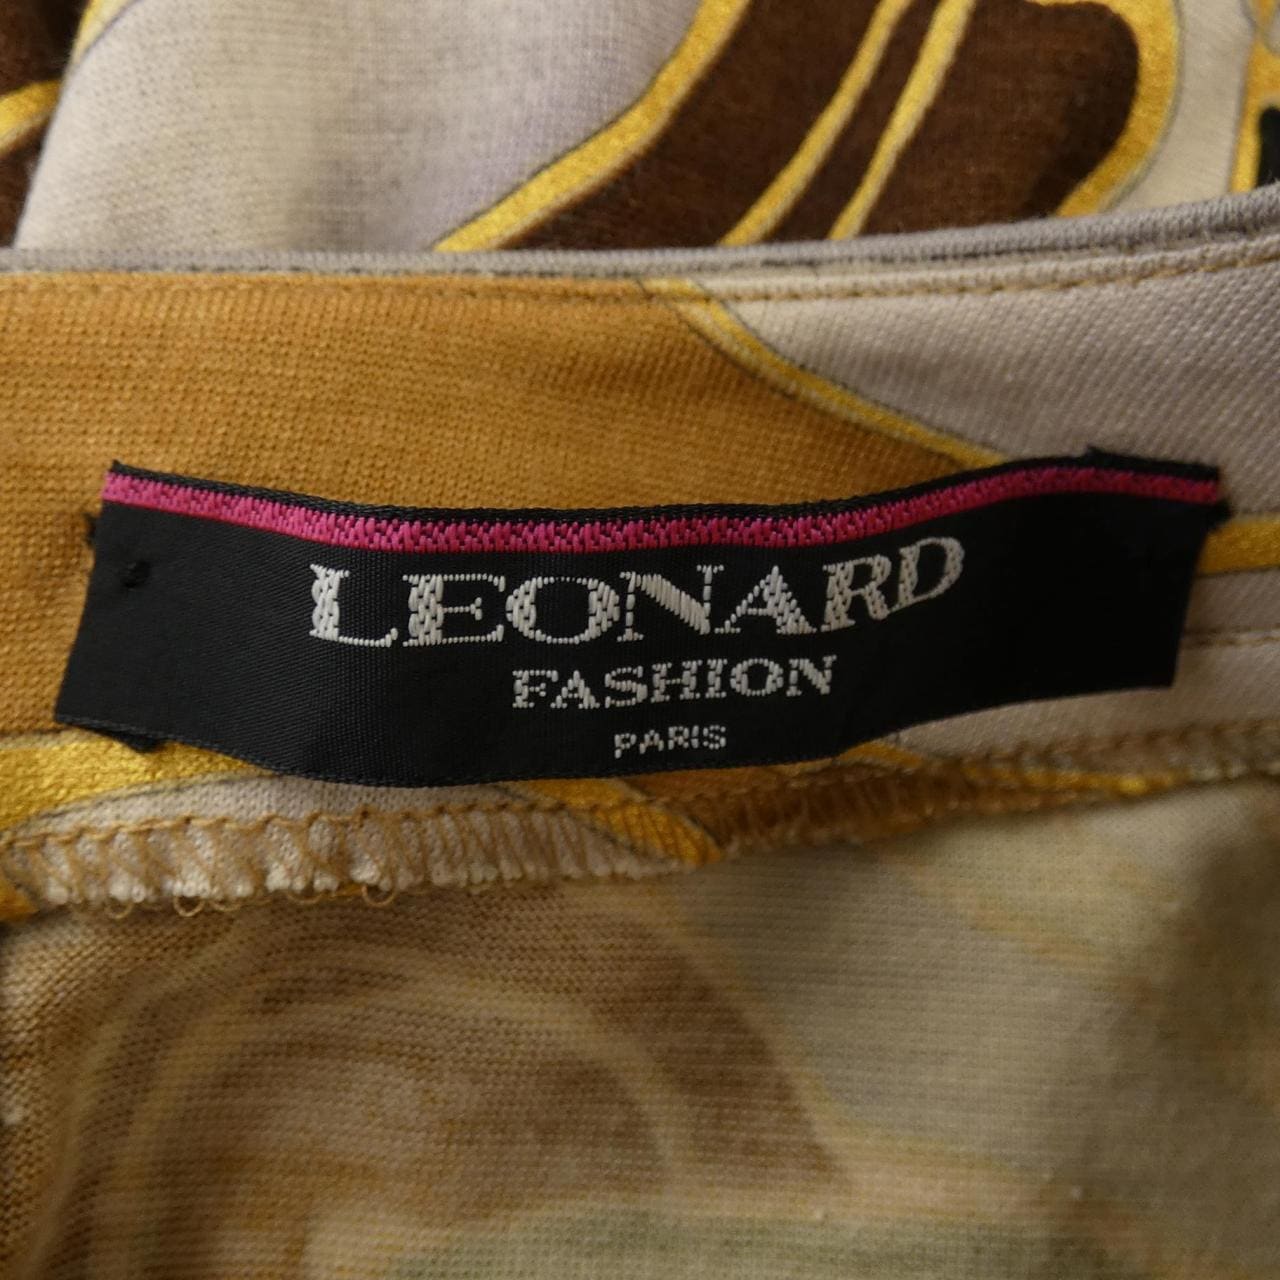 萊昂納多時尚LEONARD FASHION上衣